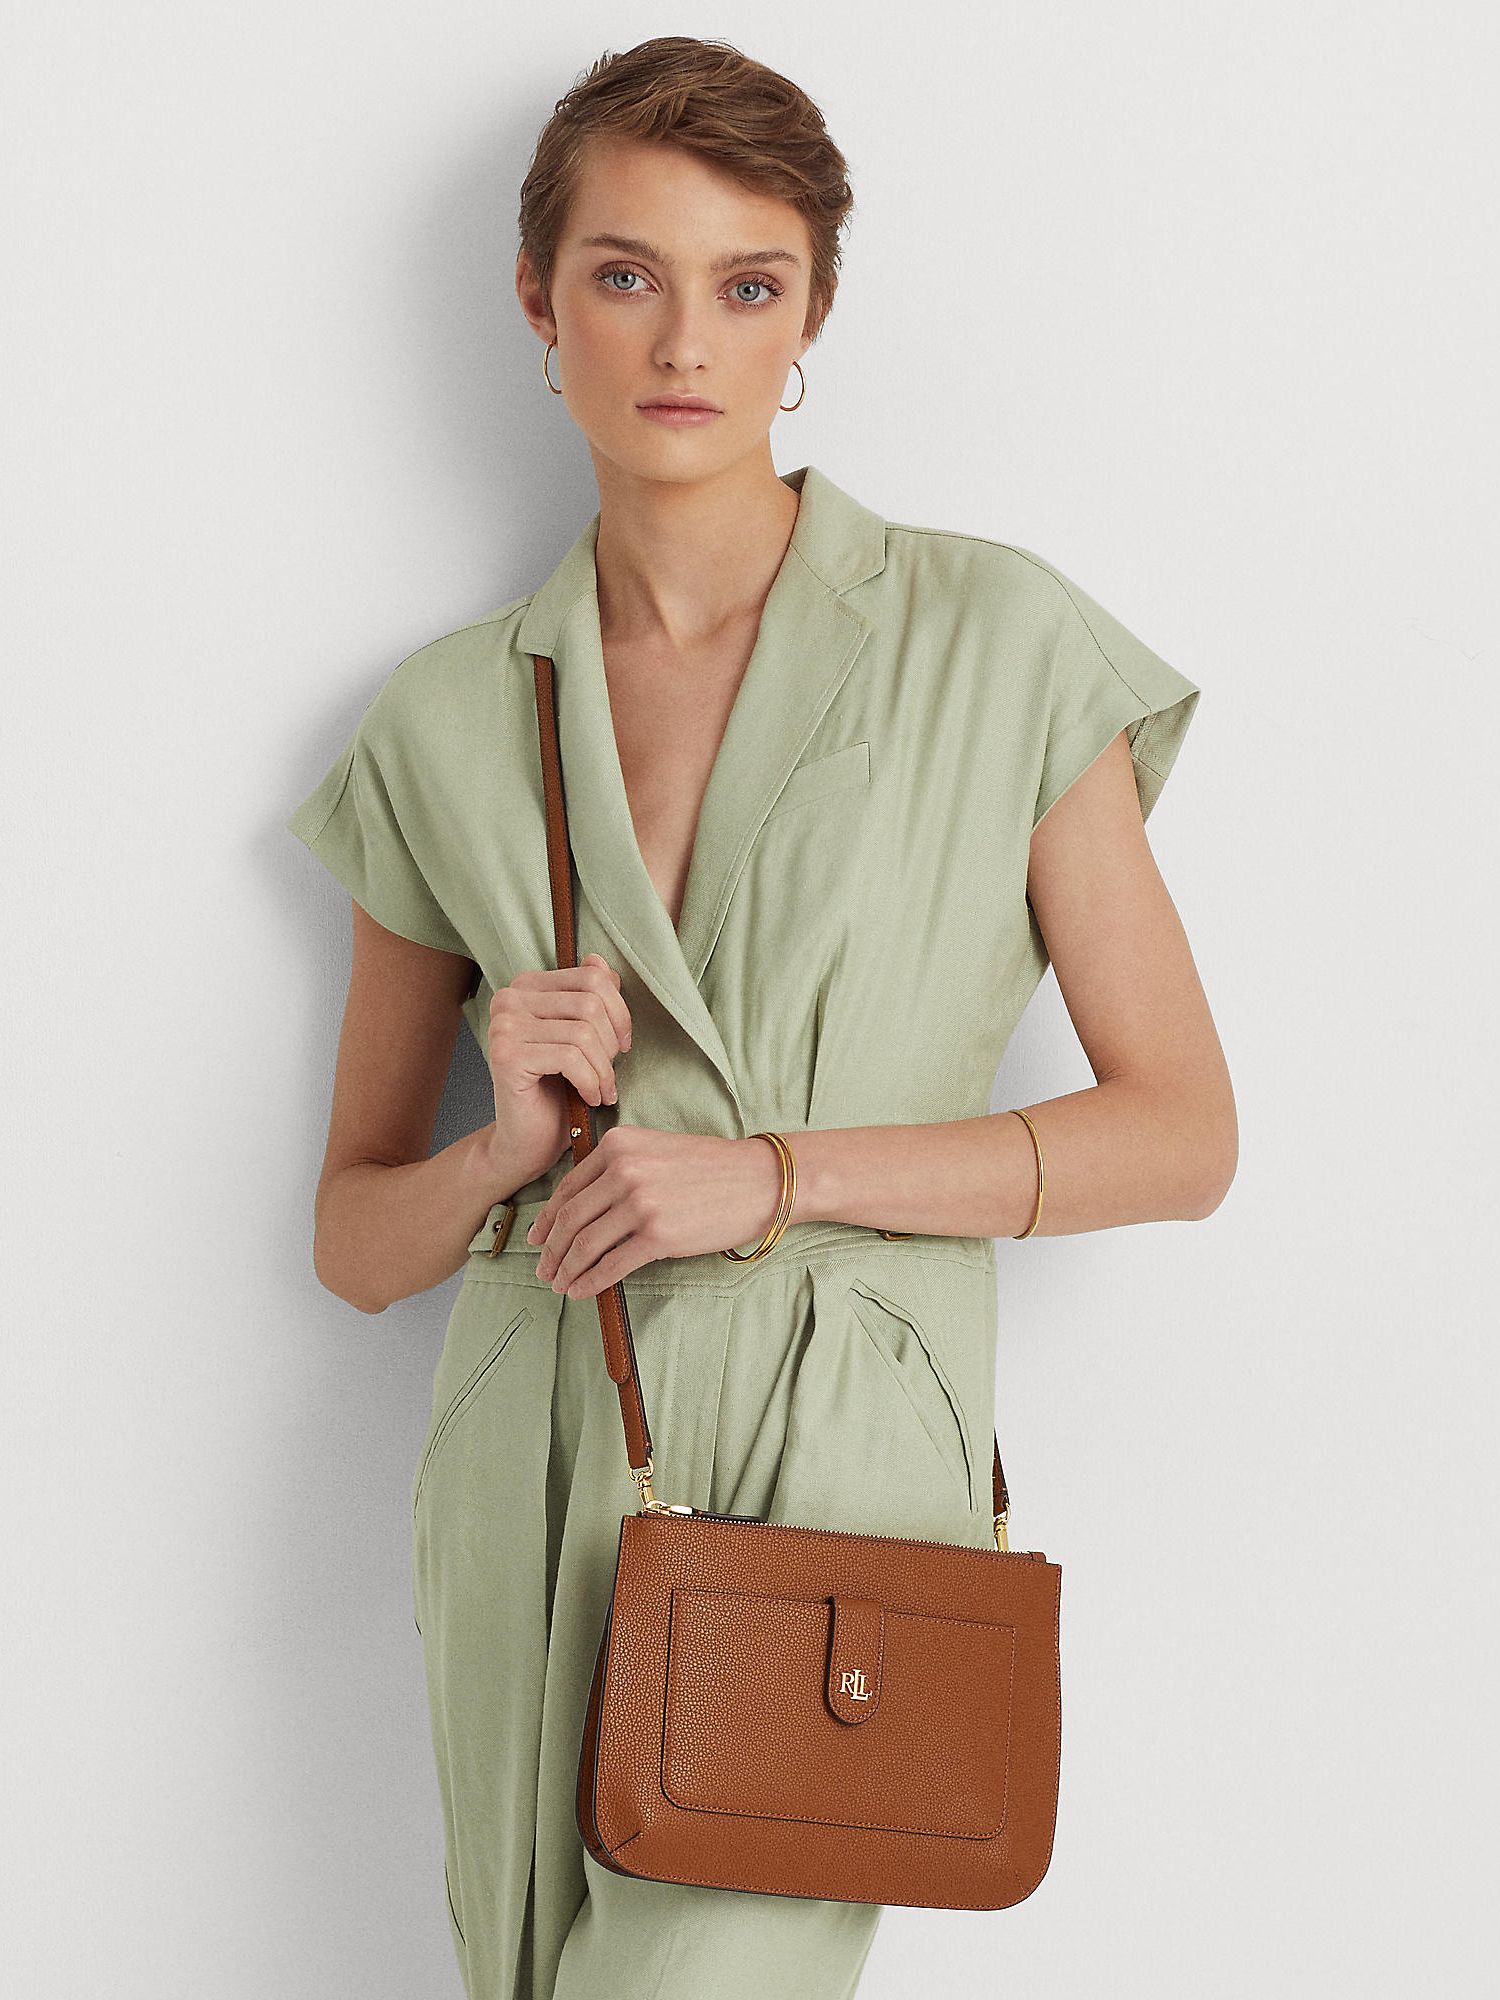 PALAY® Small Women's Crossbody Bags Soft PU Leather Wristlet